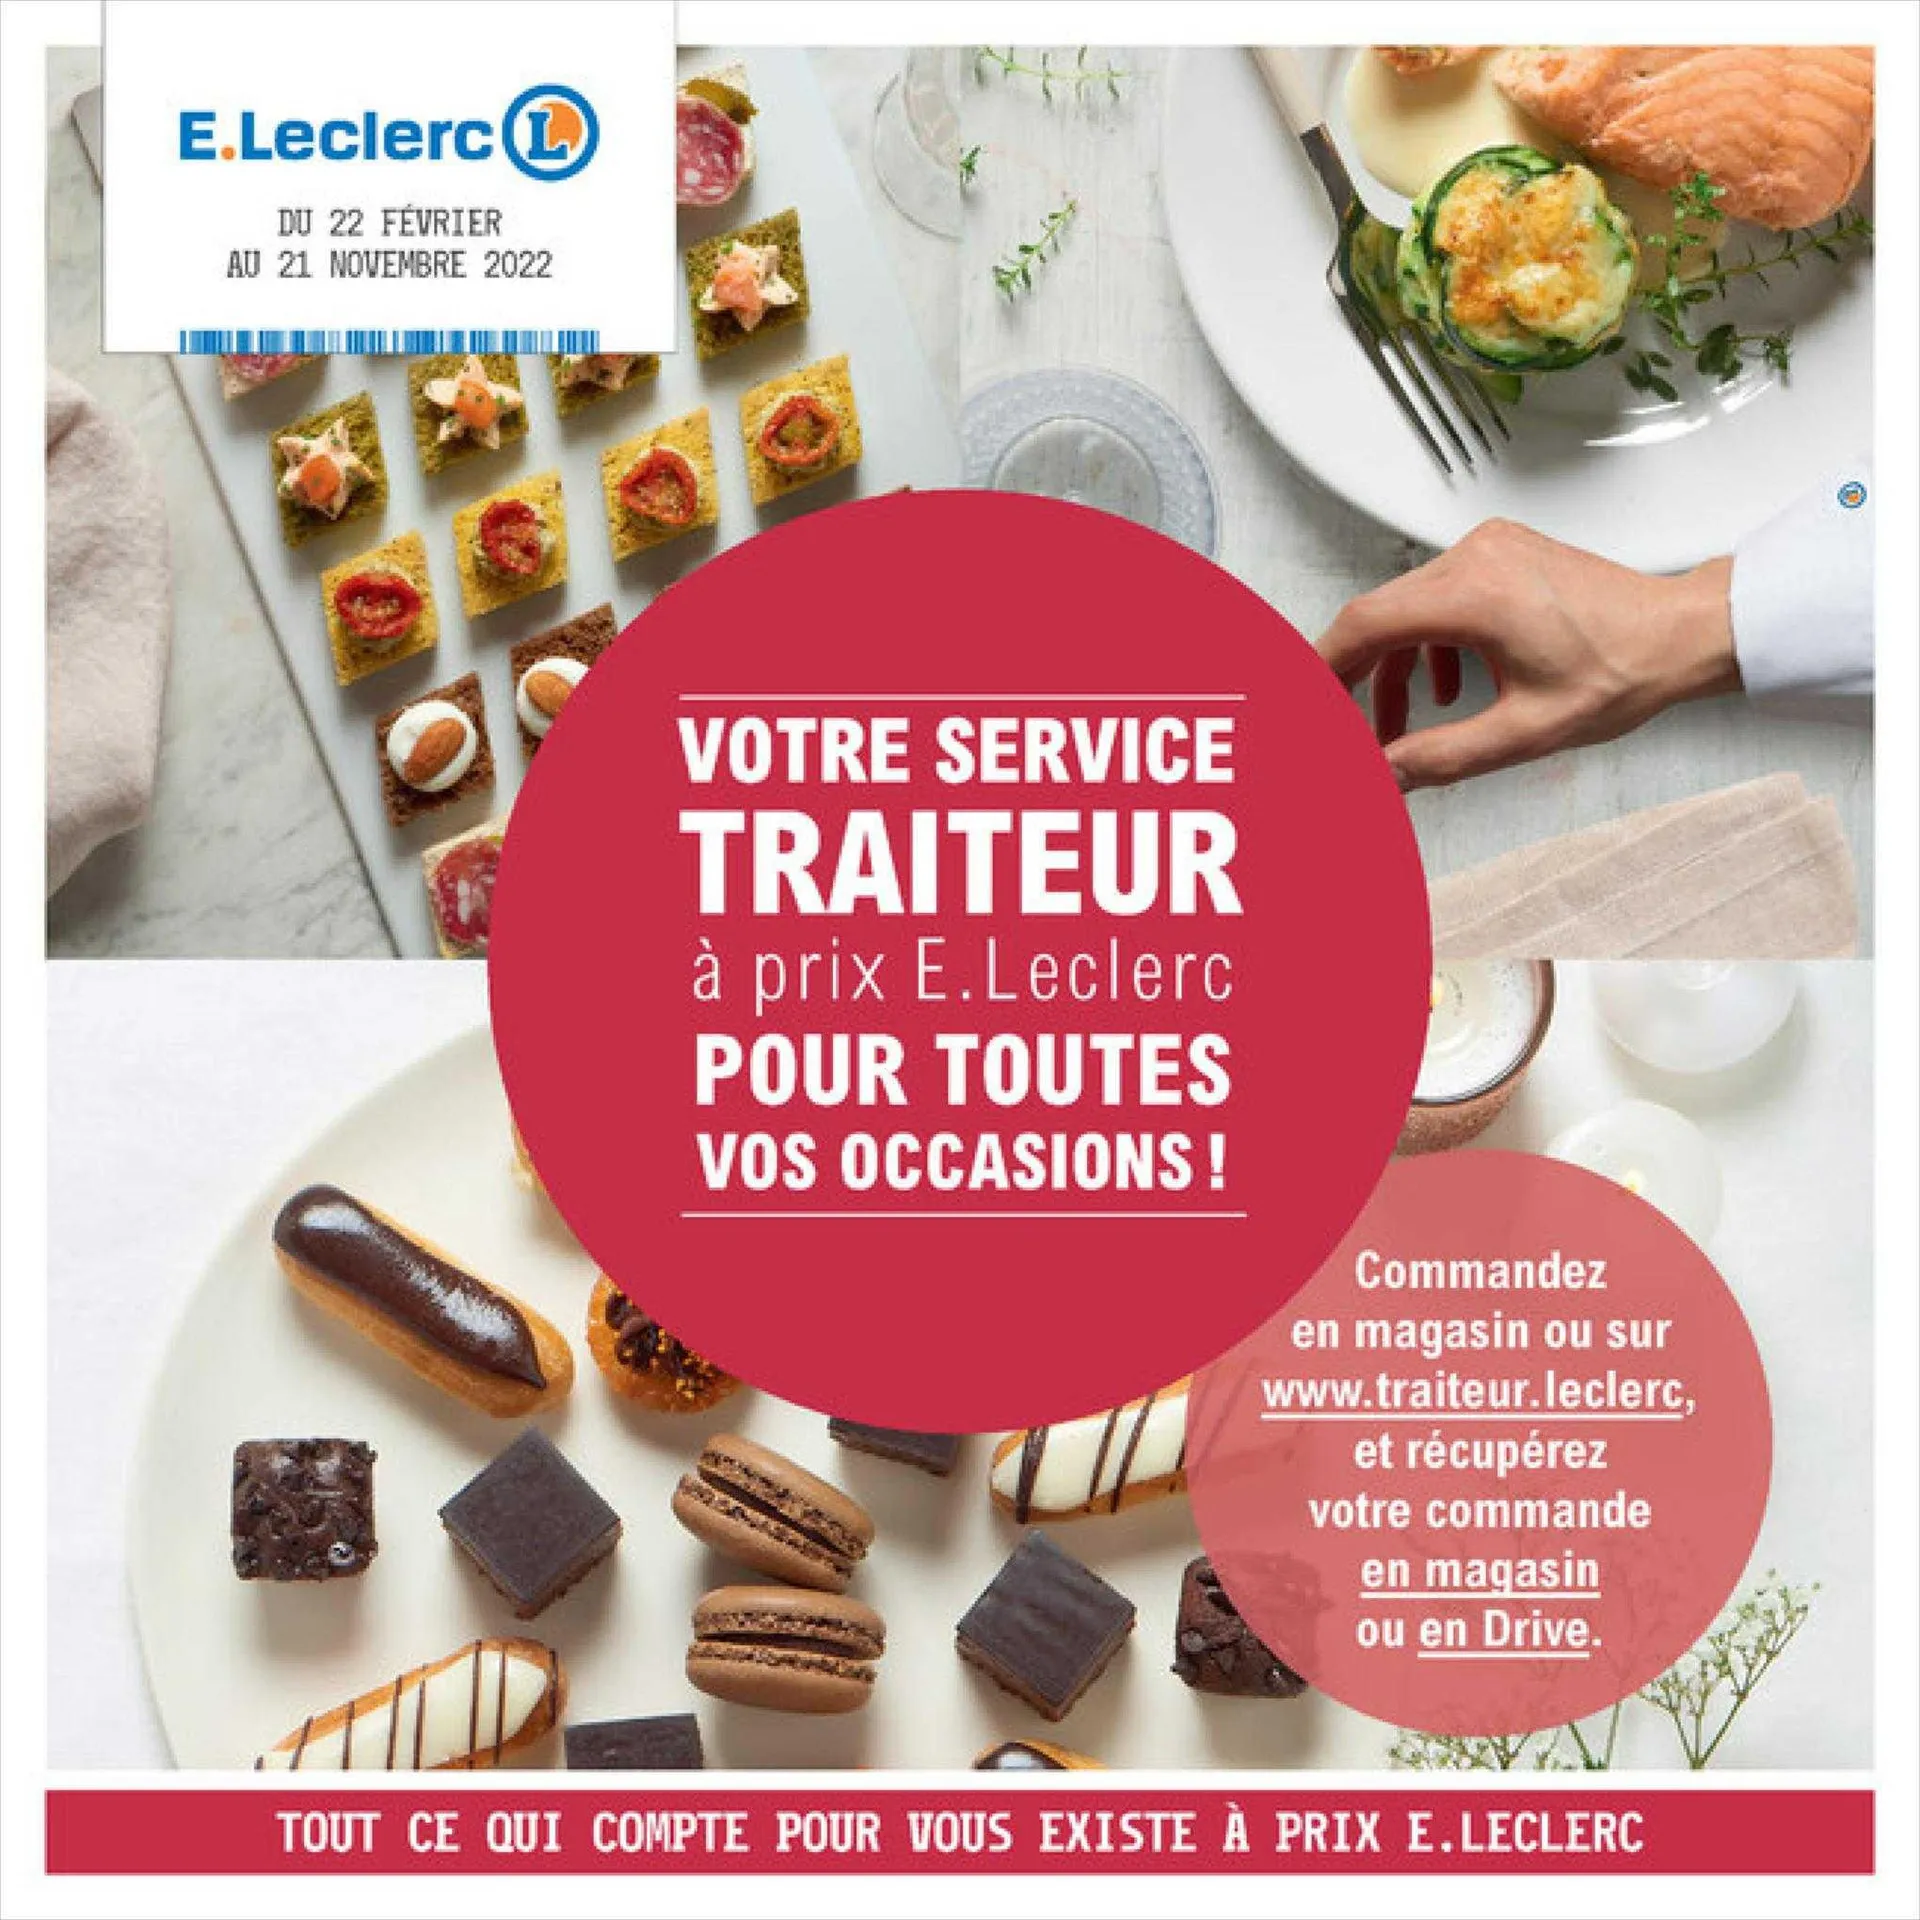 Catalogue E.Leclerc - 1